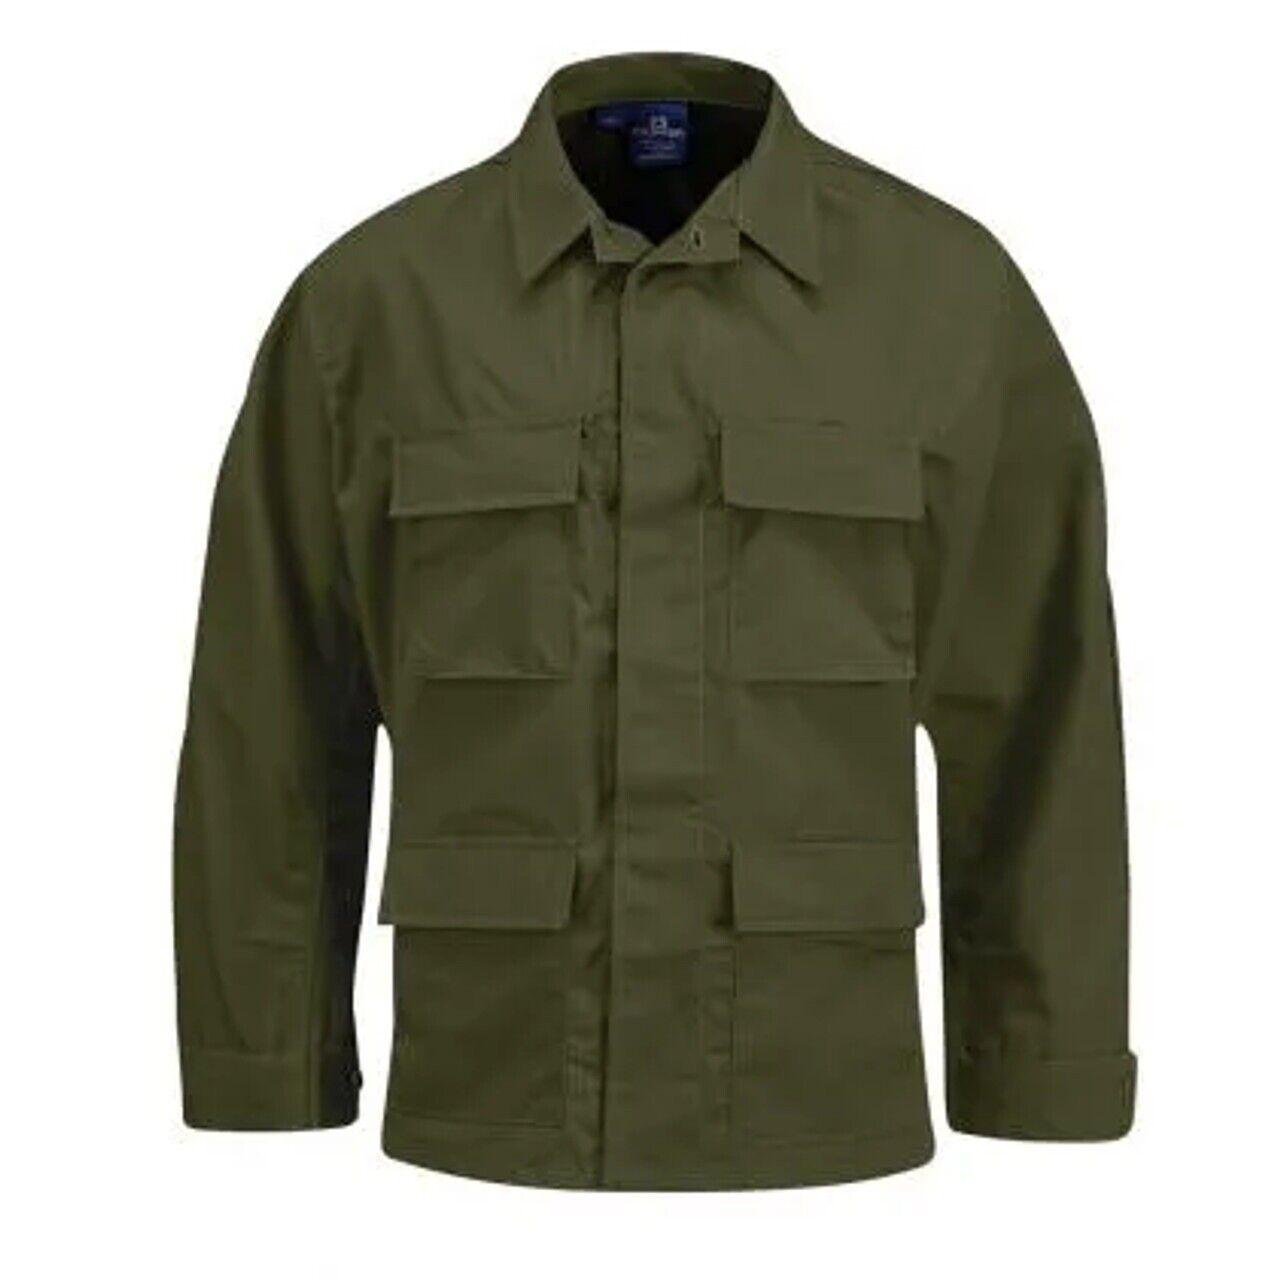 Men’s Propper Green BDU Uniform Set- 100% Cotton Ripstop Size Small Short